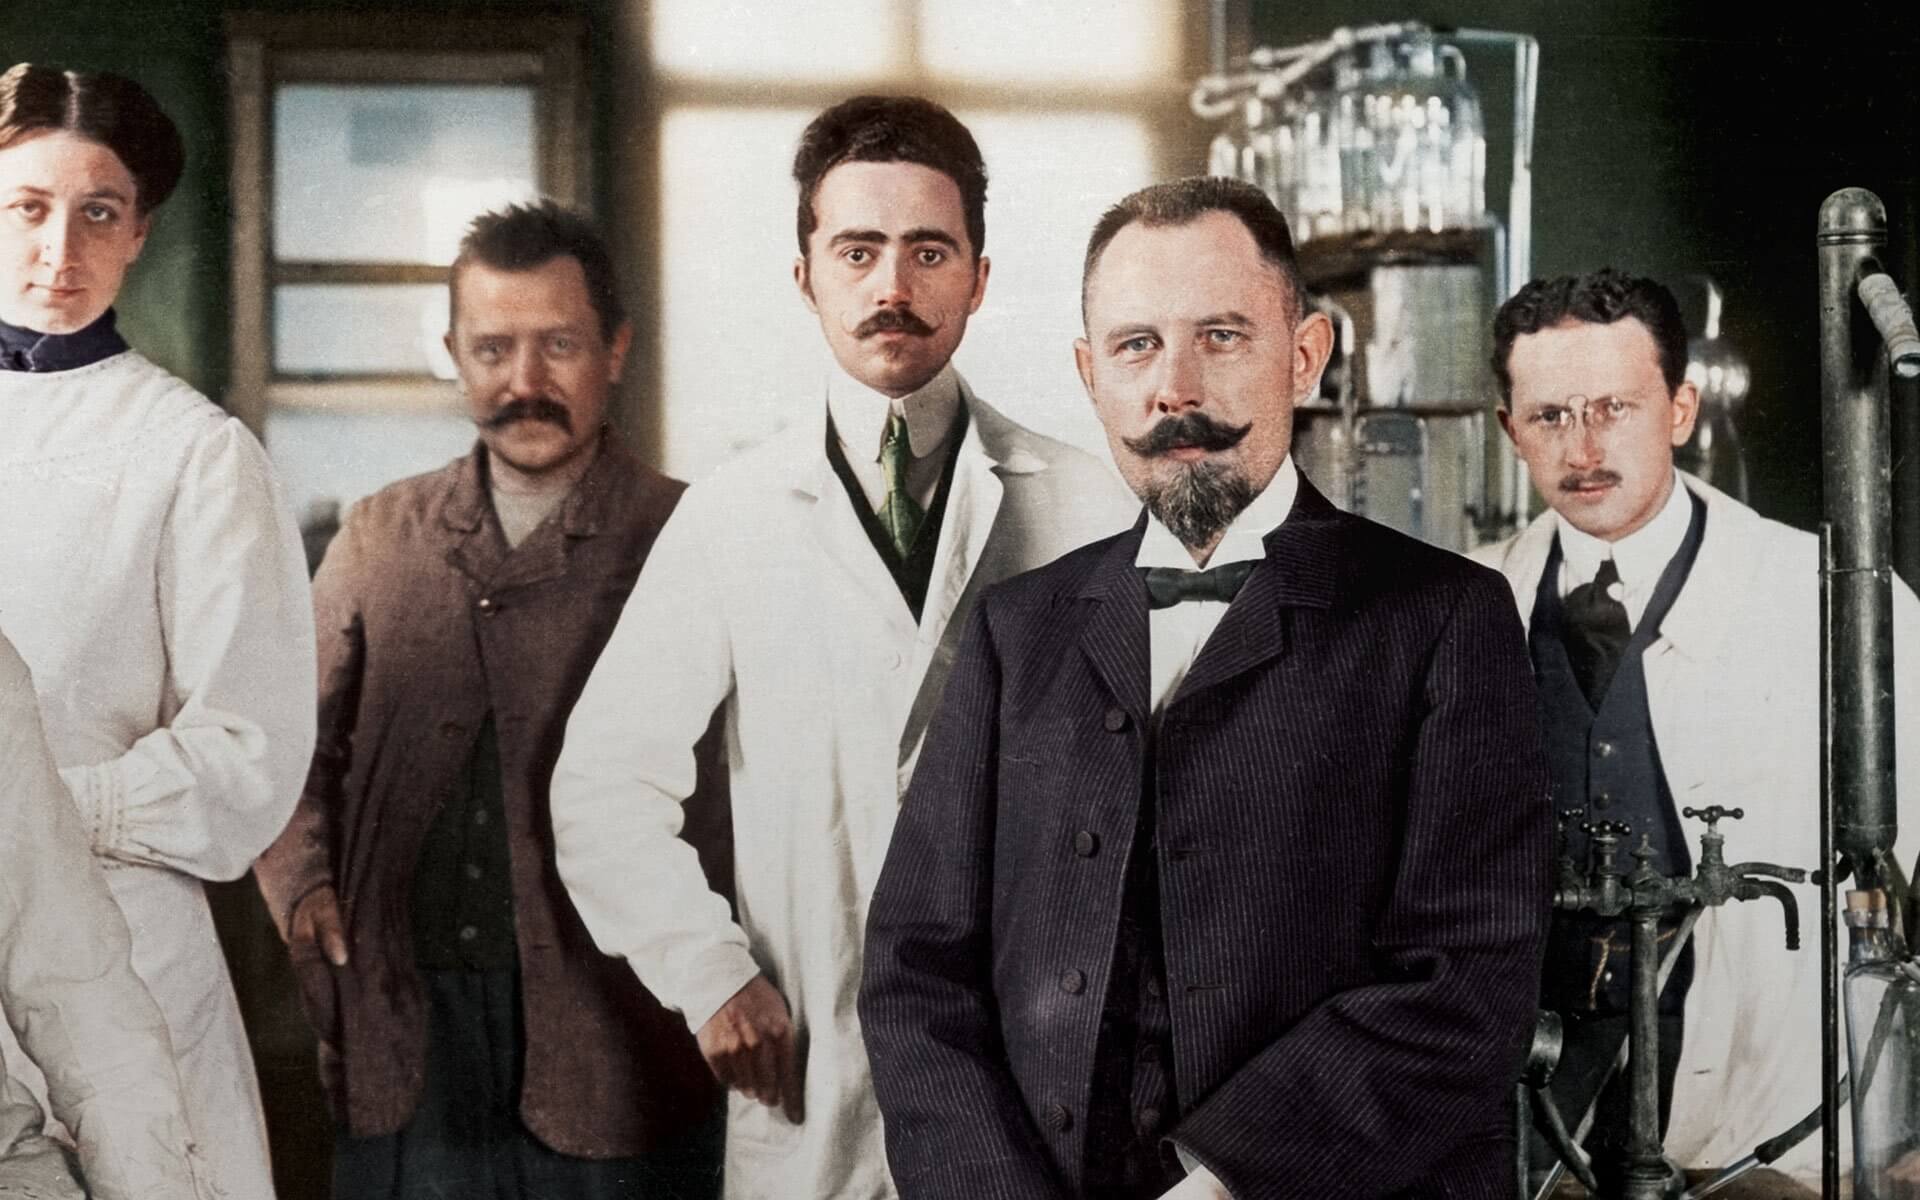 Esplora la Storia di Carlsberg attraverso i suoi Pionieri